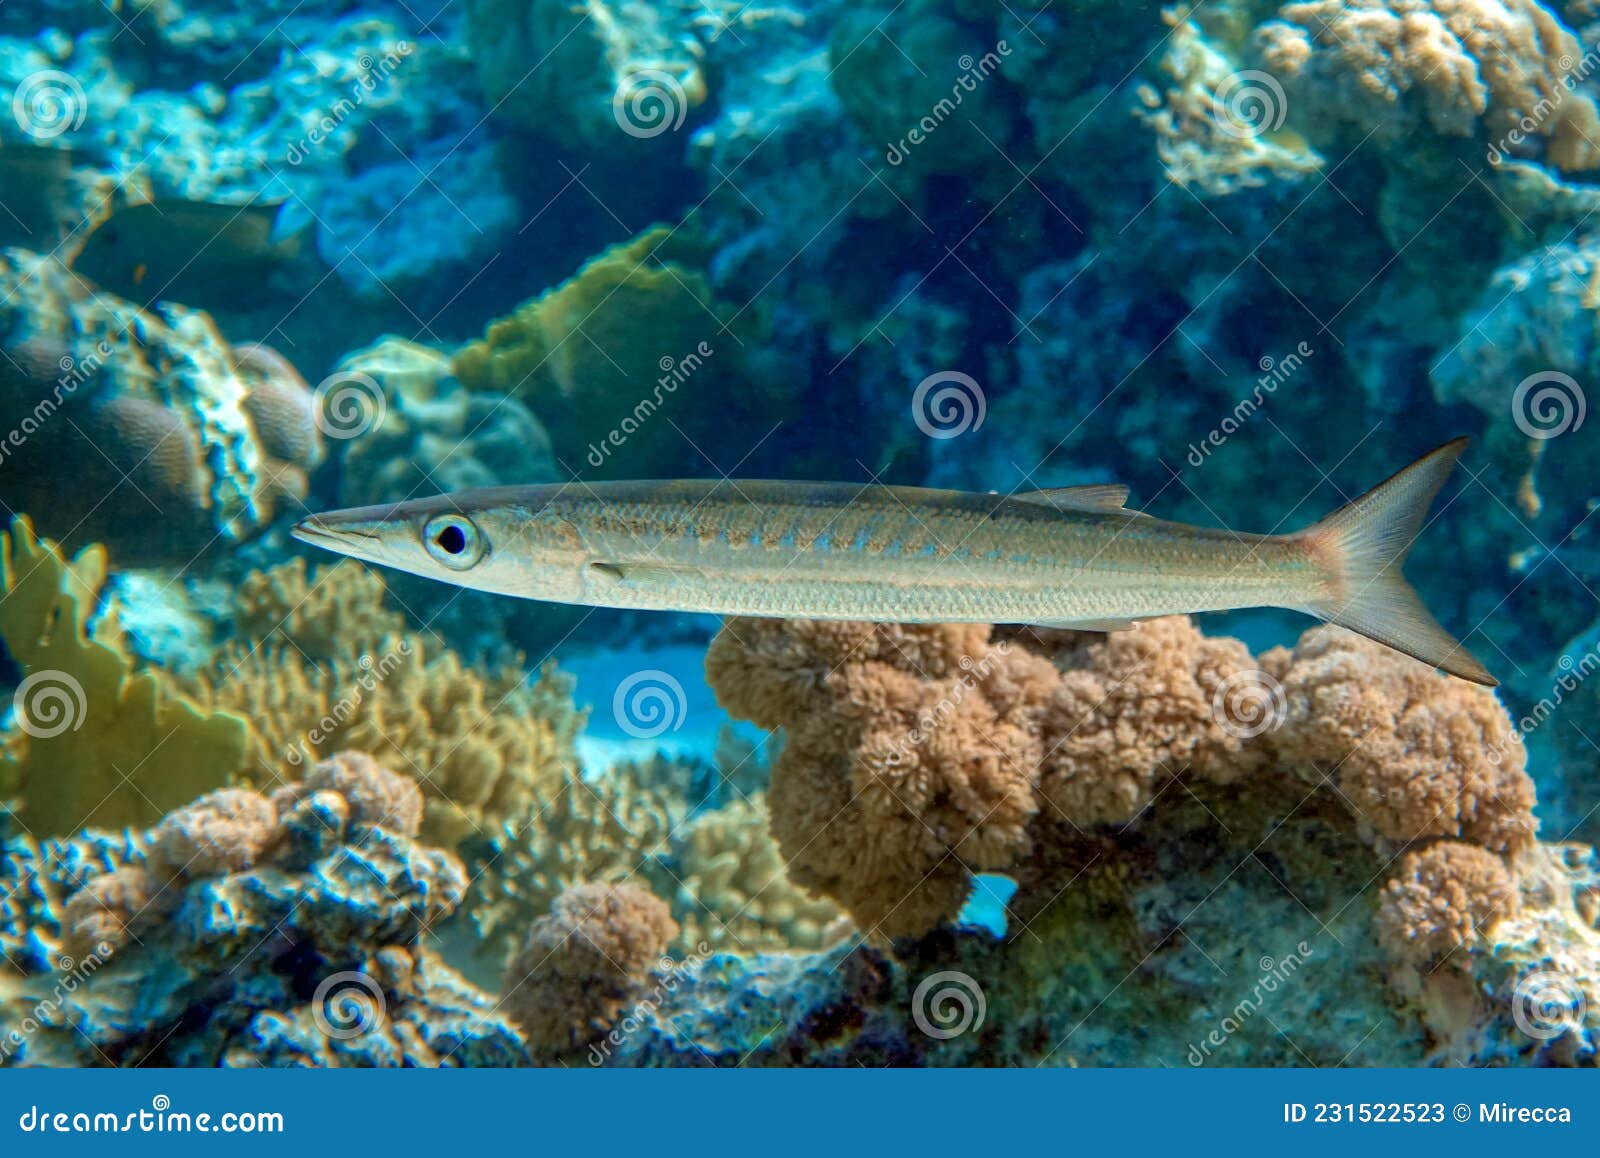 Yellowtail barracuda stock photos